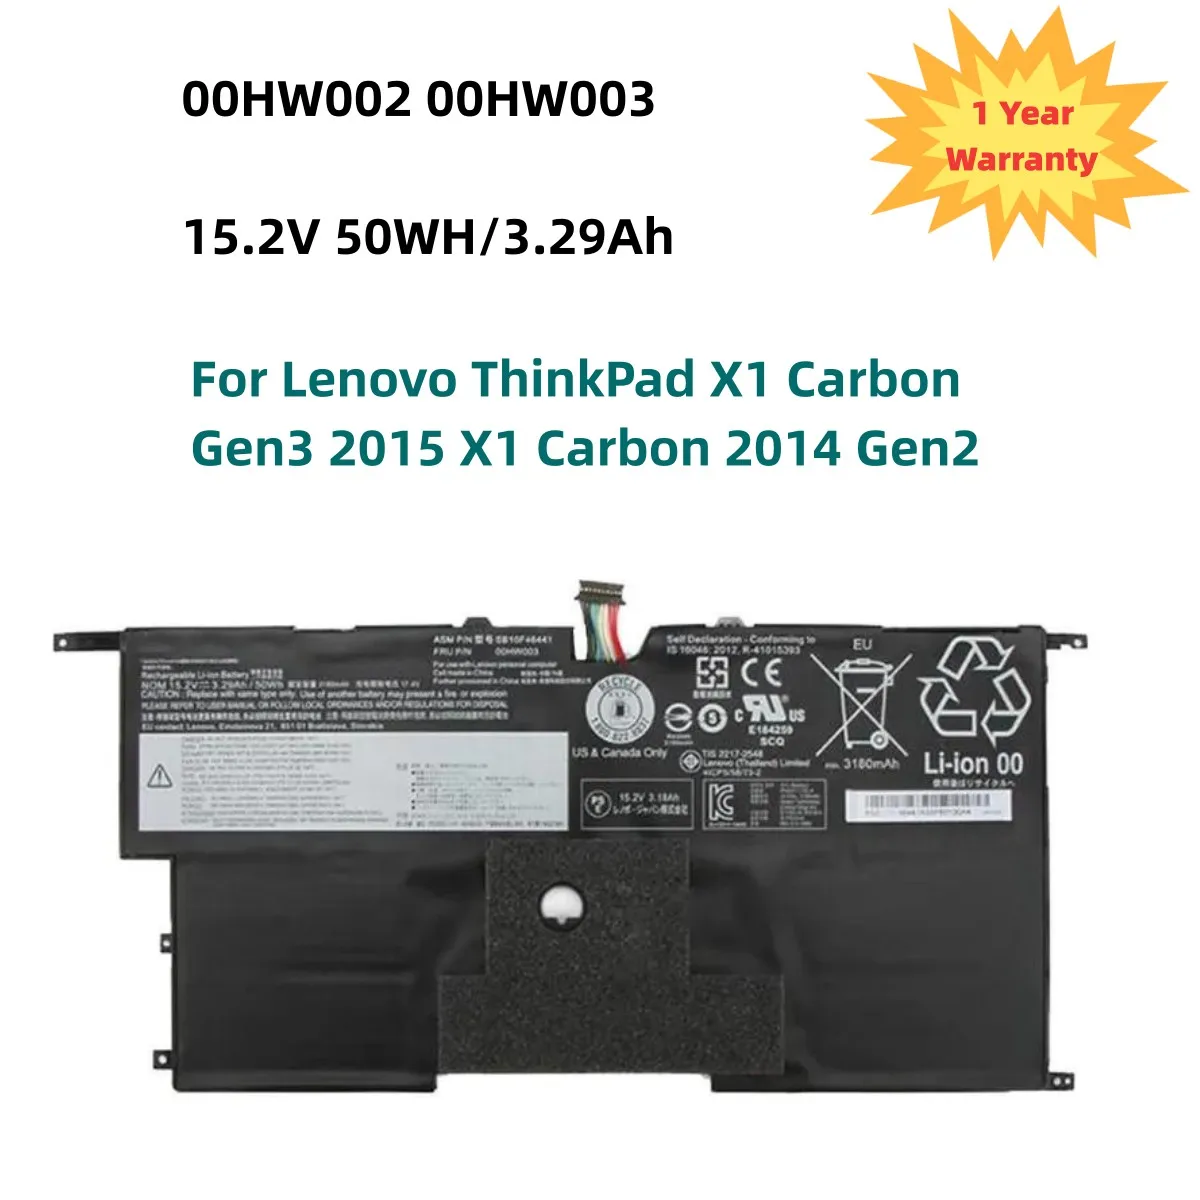 

00HW003 SB10F46440 45N1700 Laptop Battery For Lenovo ThinkPad X1 Carbon Gen3 2015 X1 Carbon 2014 Gen2 00HW002 45N1702 15.2V 50WH